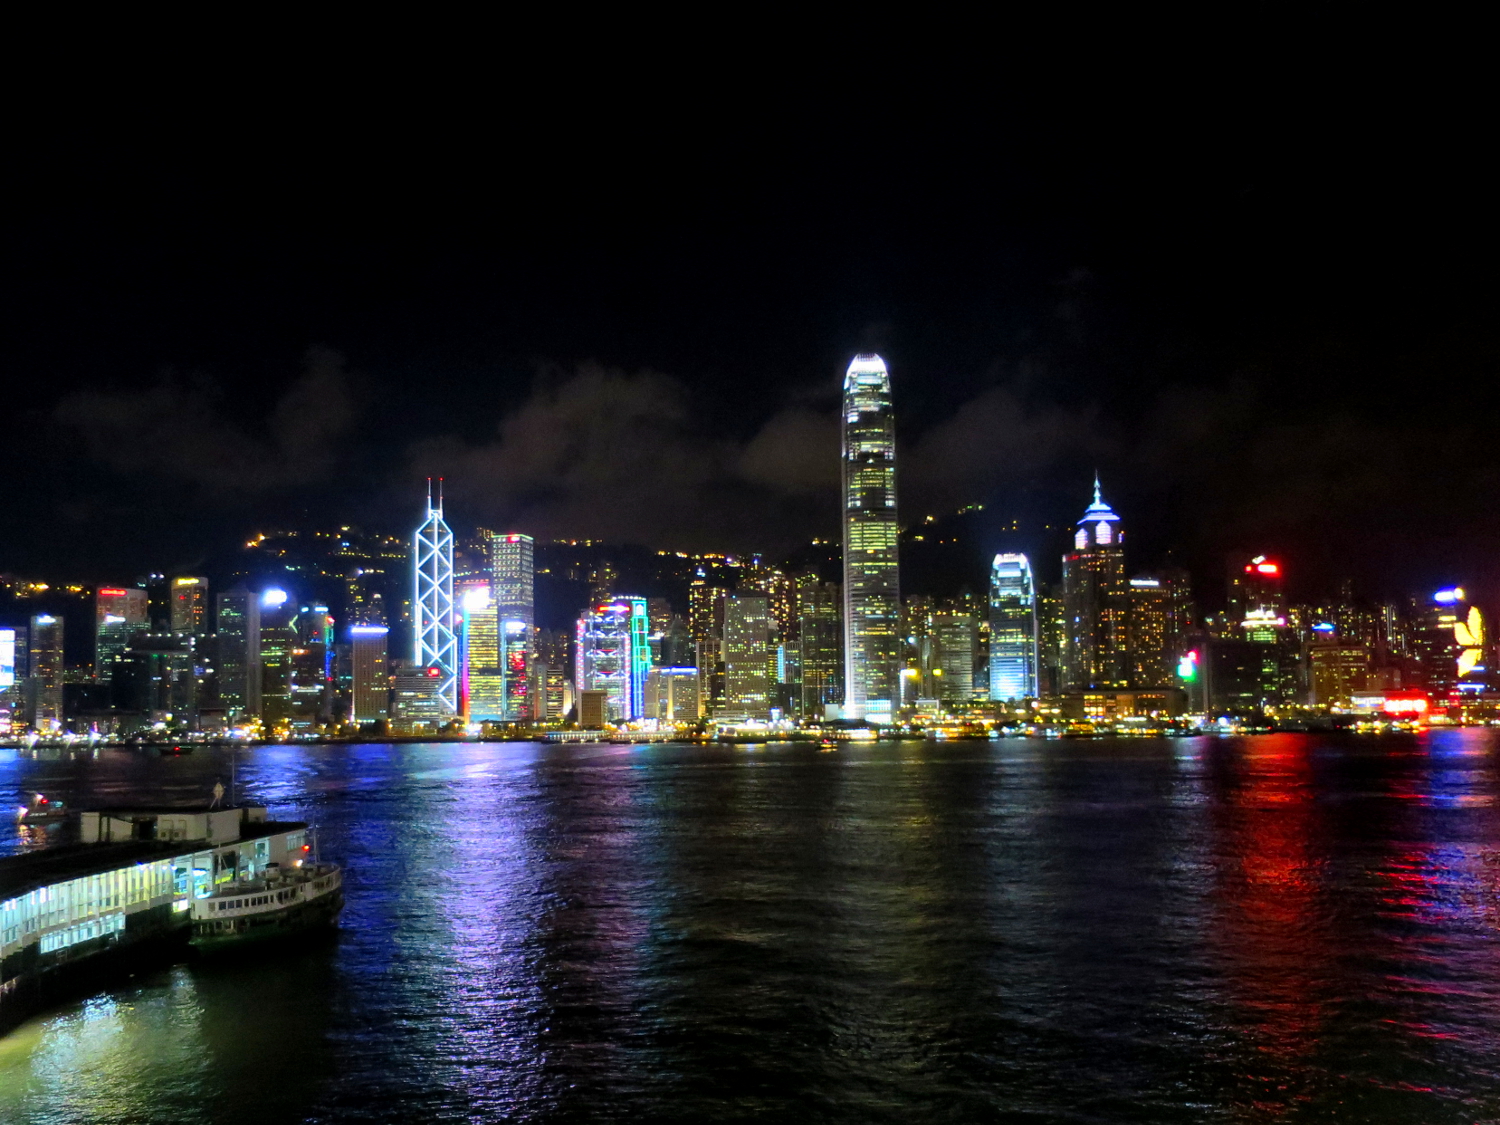 View of Hong Kong Island from Tsim Sha Tsui. Image by Megan Eaves / londoninfopage